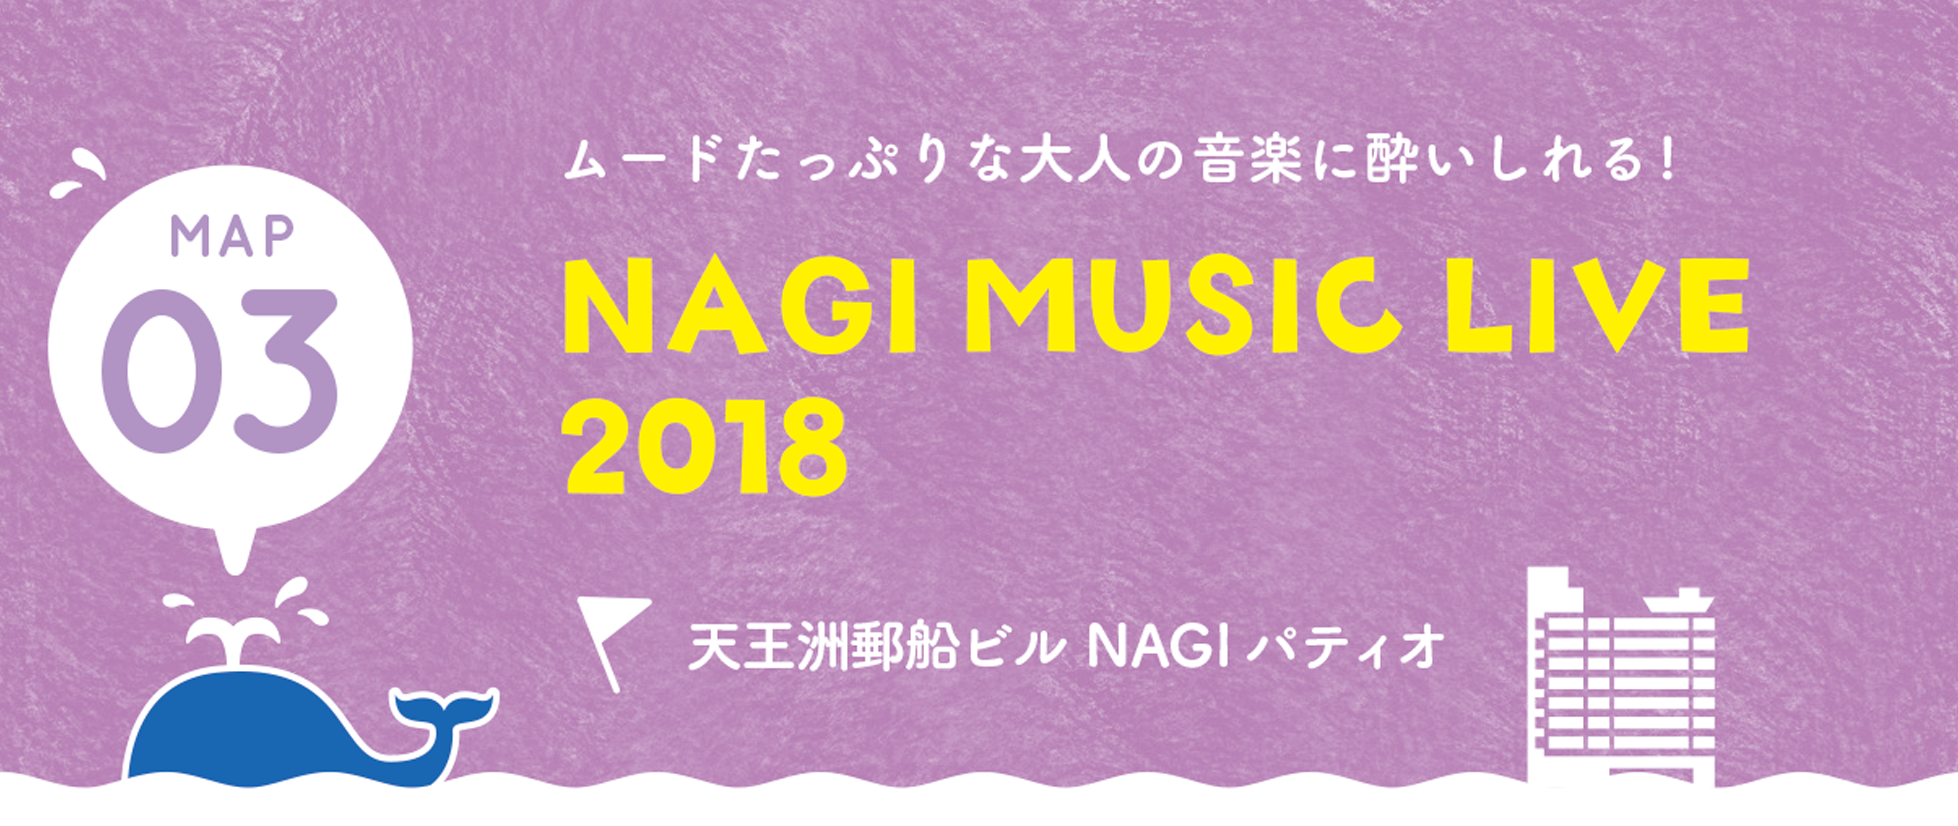 NAGI MUSIC LIVE 2018